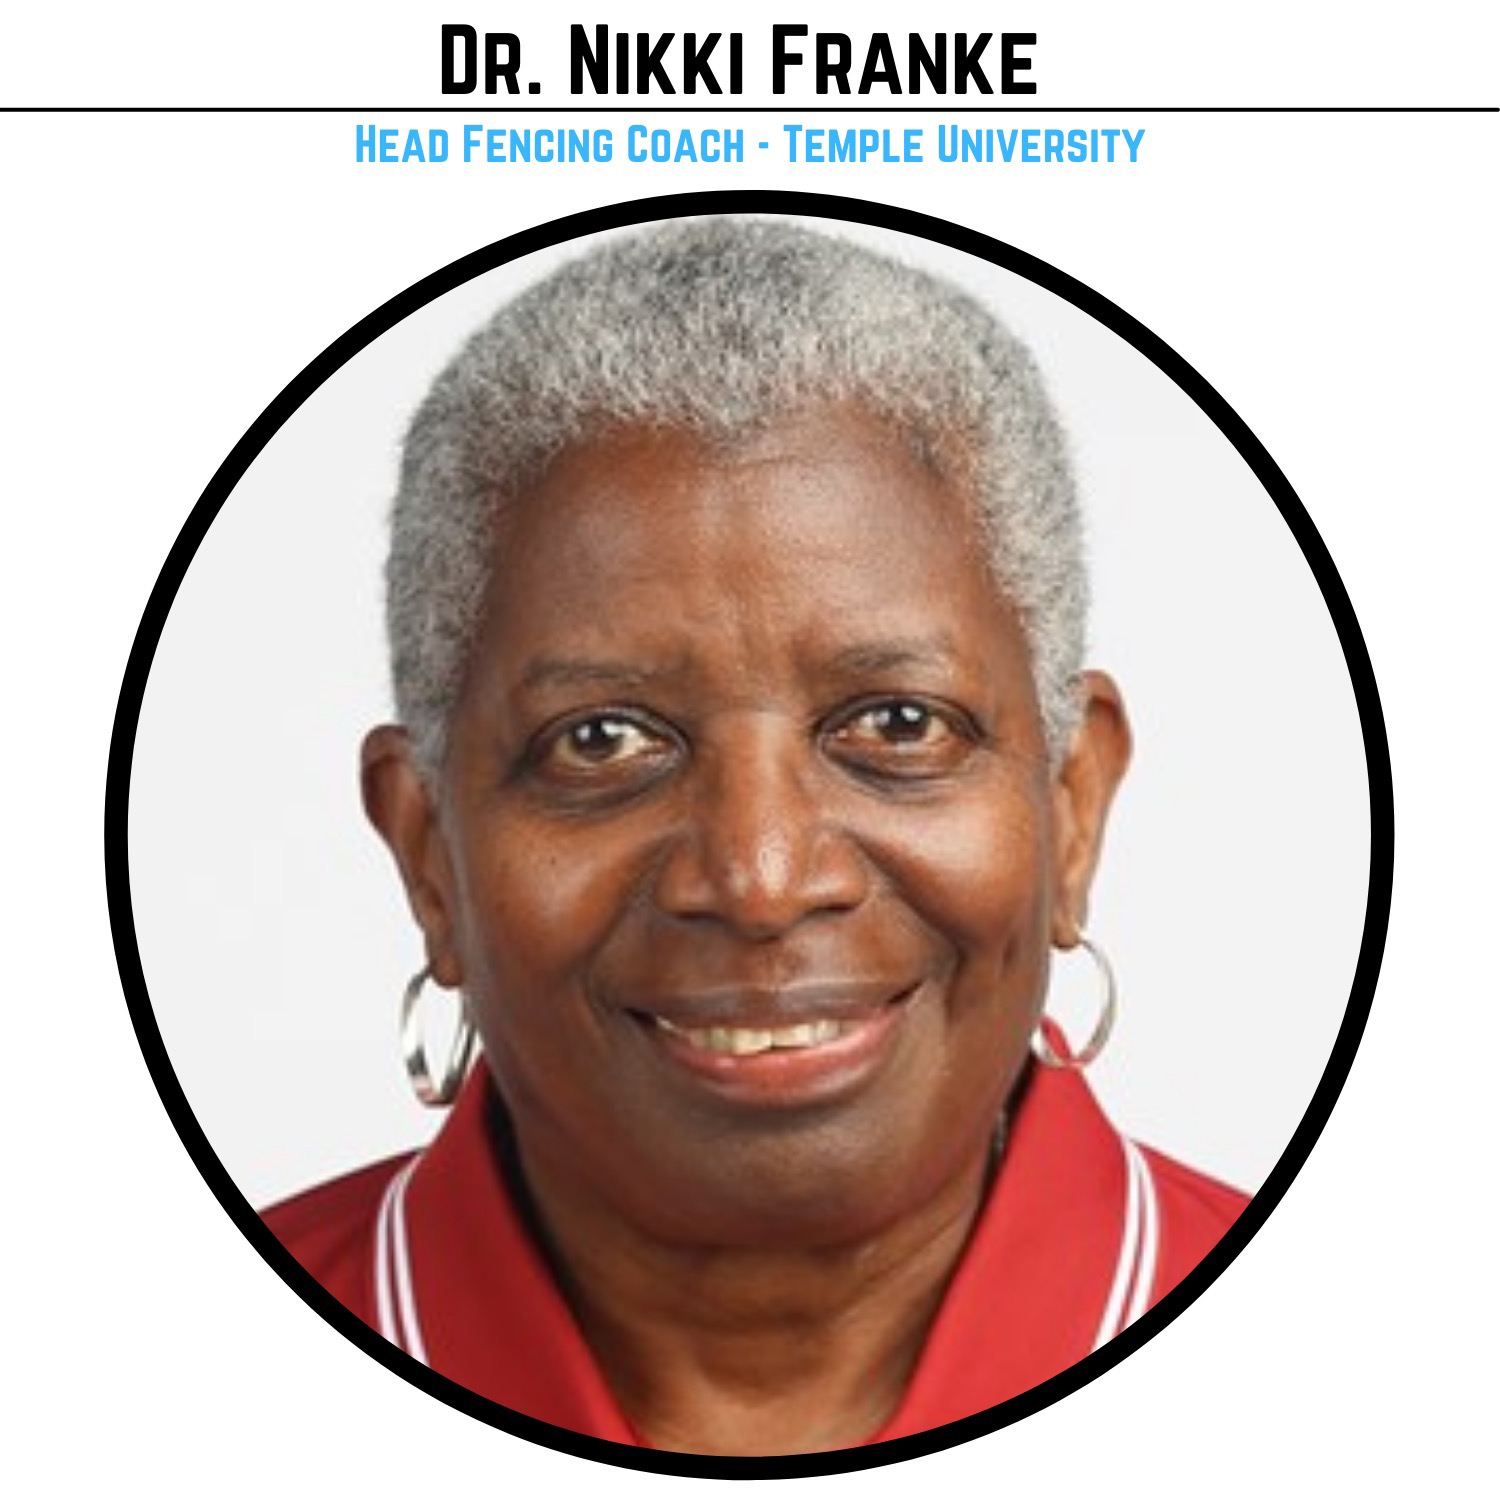 Dr. Nikki Franke